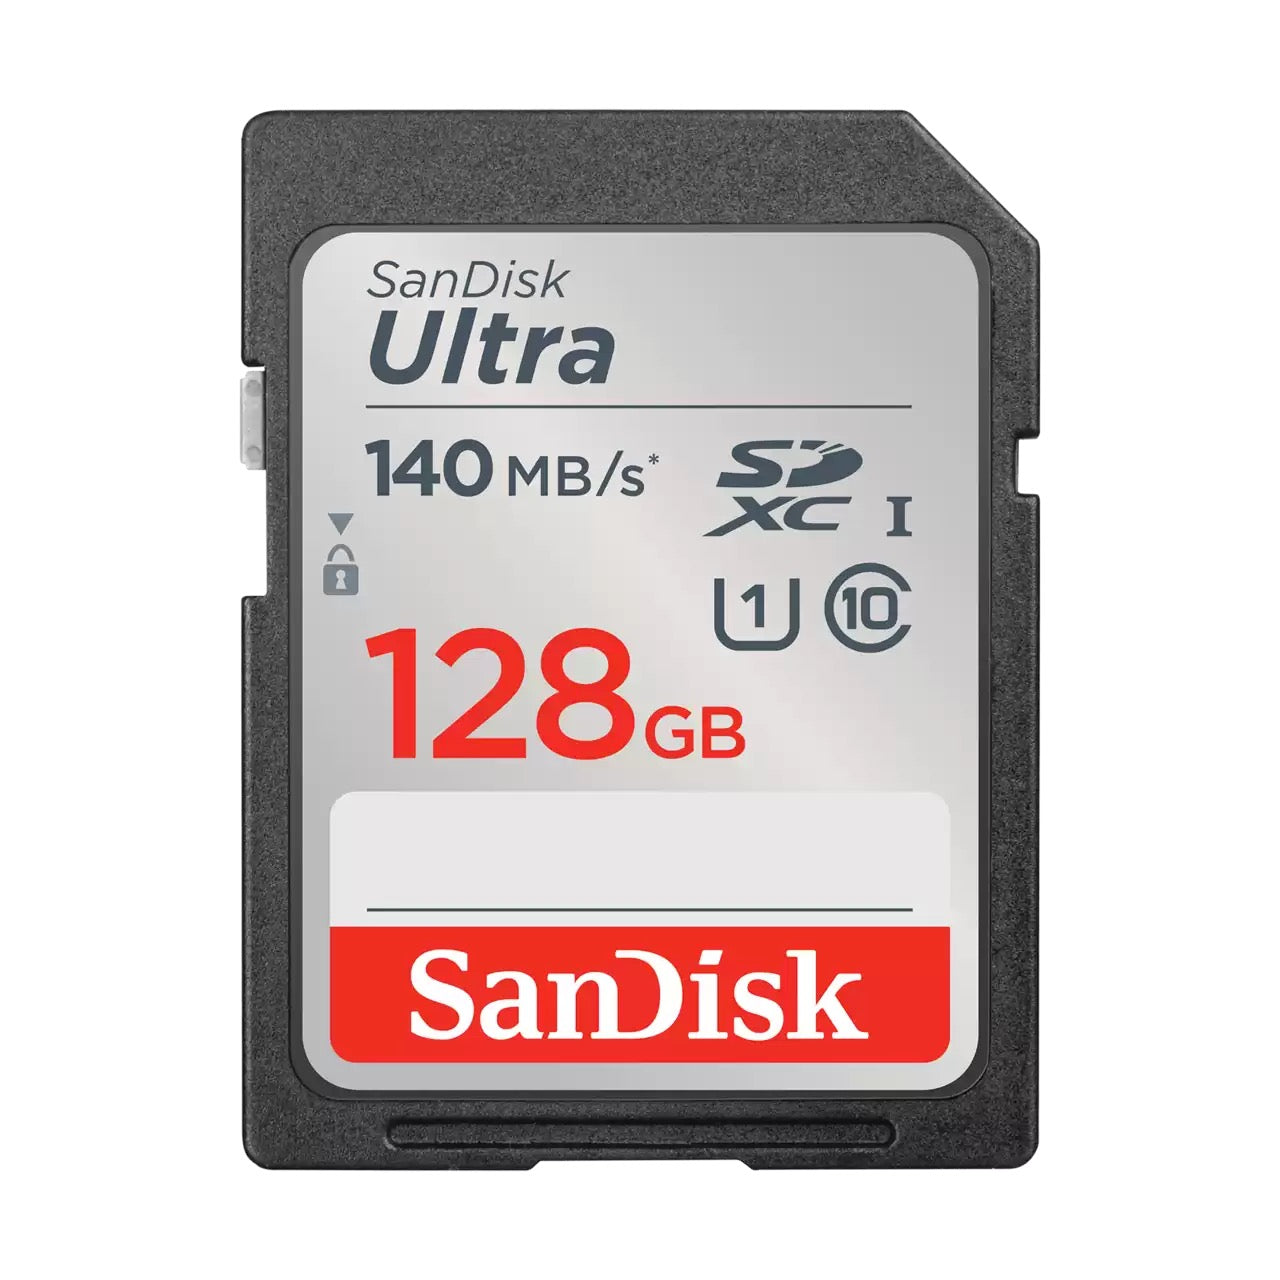 Sandisk 128Gb SDXC Ultra 140MB/s Memory Card Sandisk SD Card